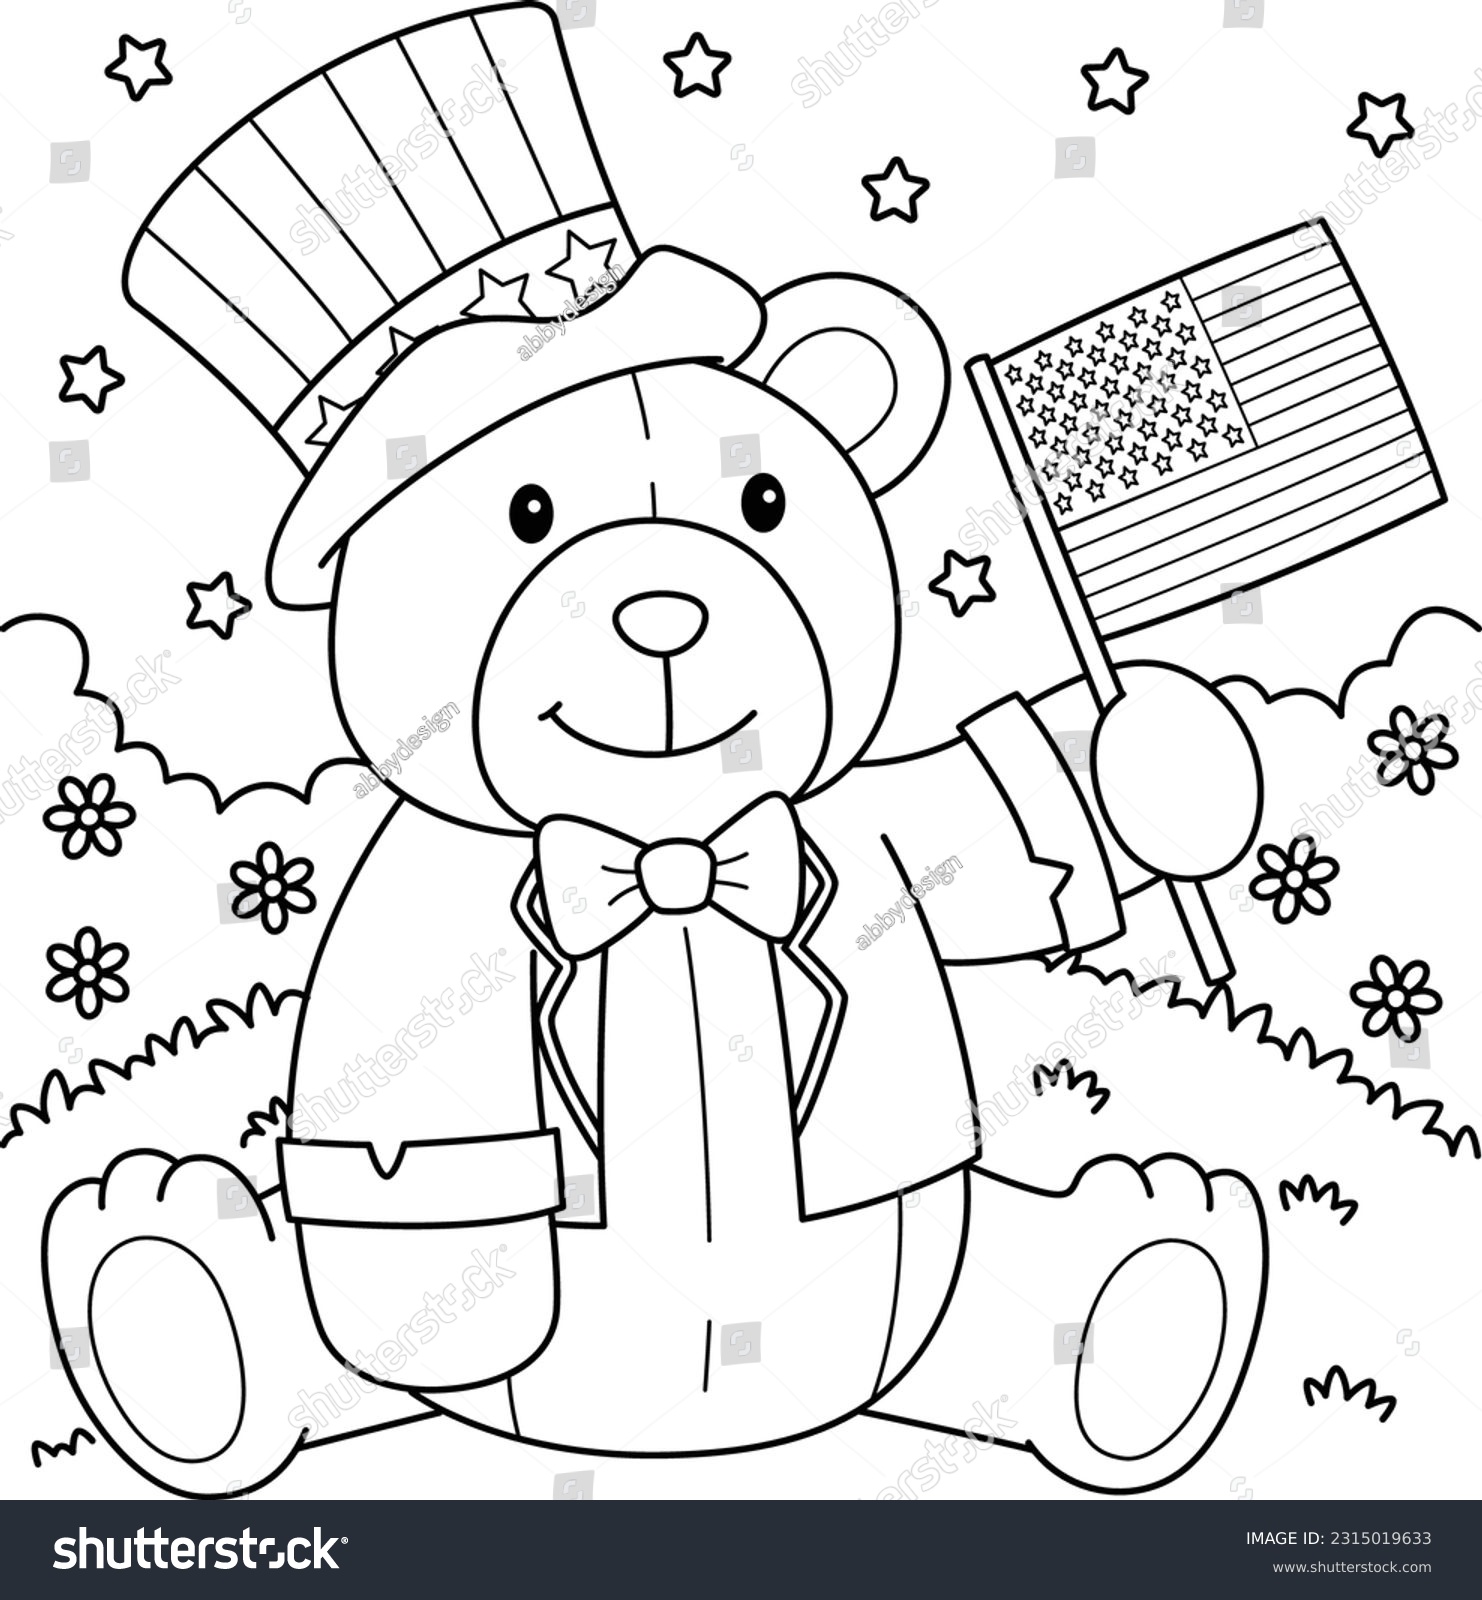 Th july teddy bear us flag stock vector royalty free